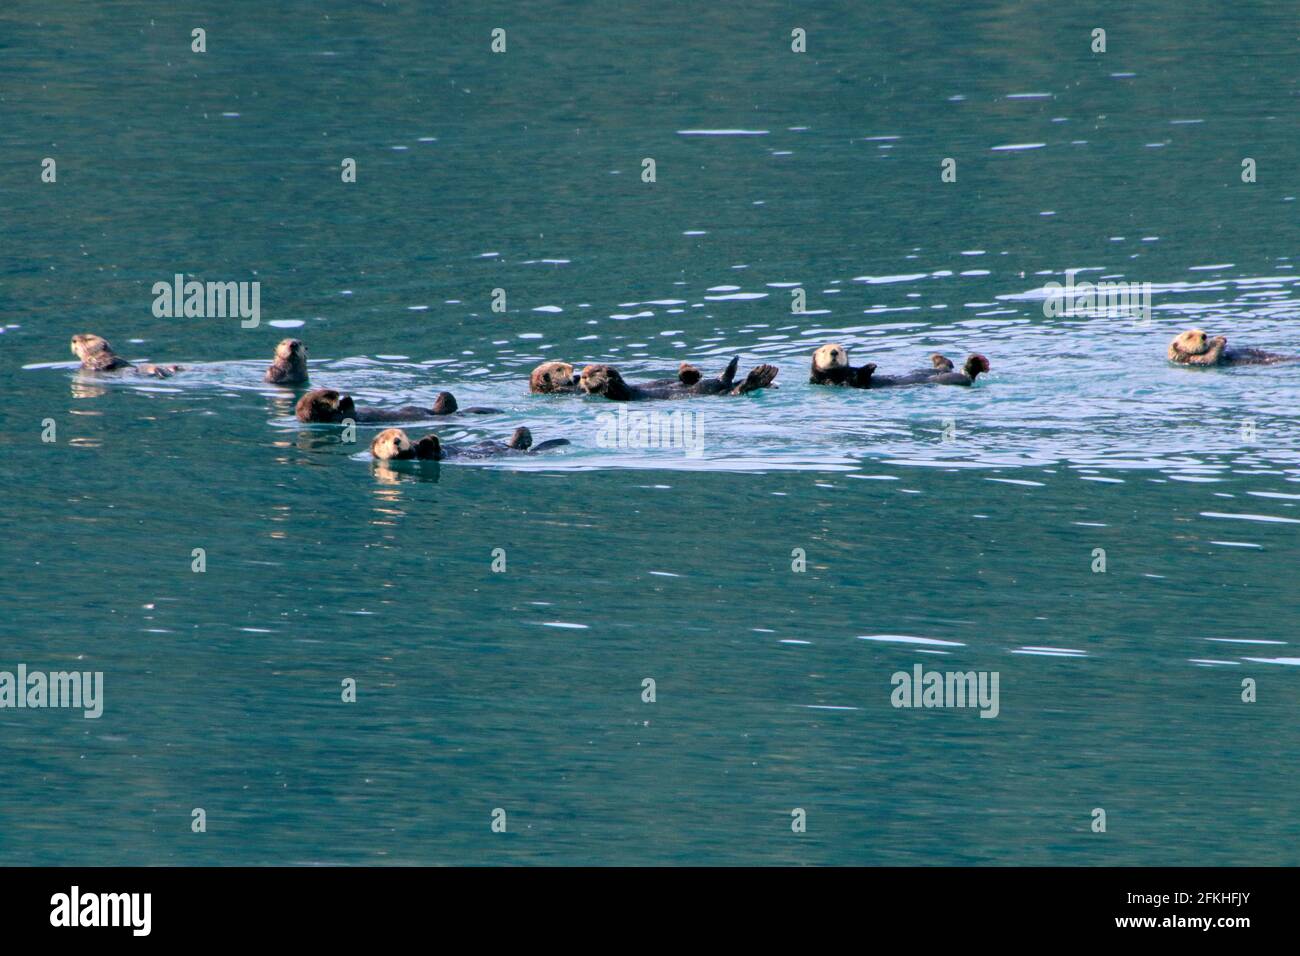 Seeotter Schwimmen in der Nähe der Kenai Fjorde Alaska USA Stockfotografie  - Alamy